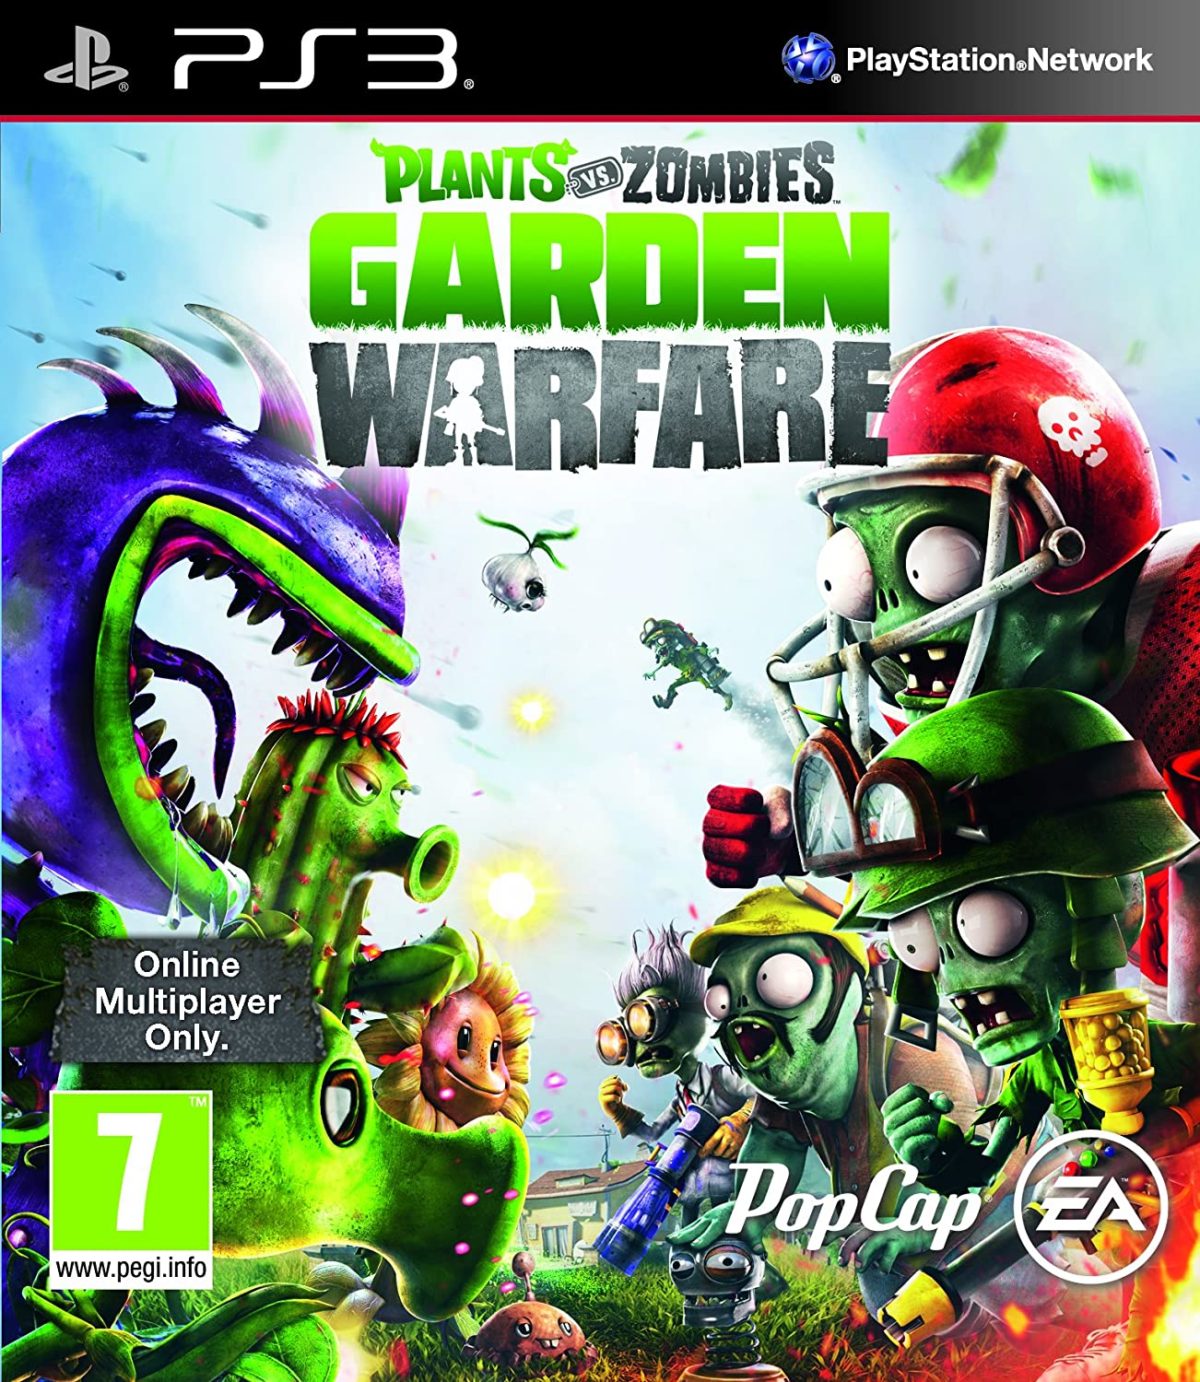 Plants vs. Zombies: Garden Warfare player count stats